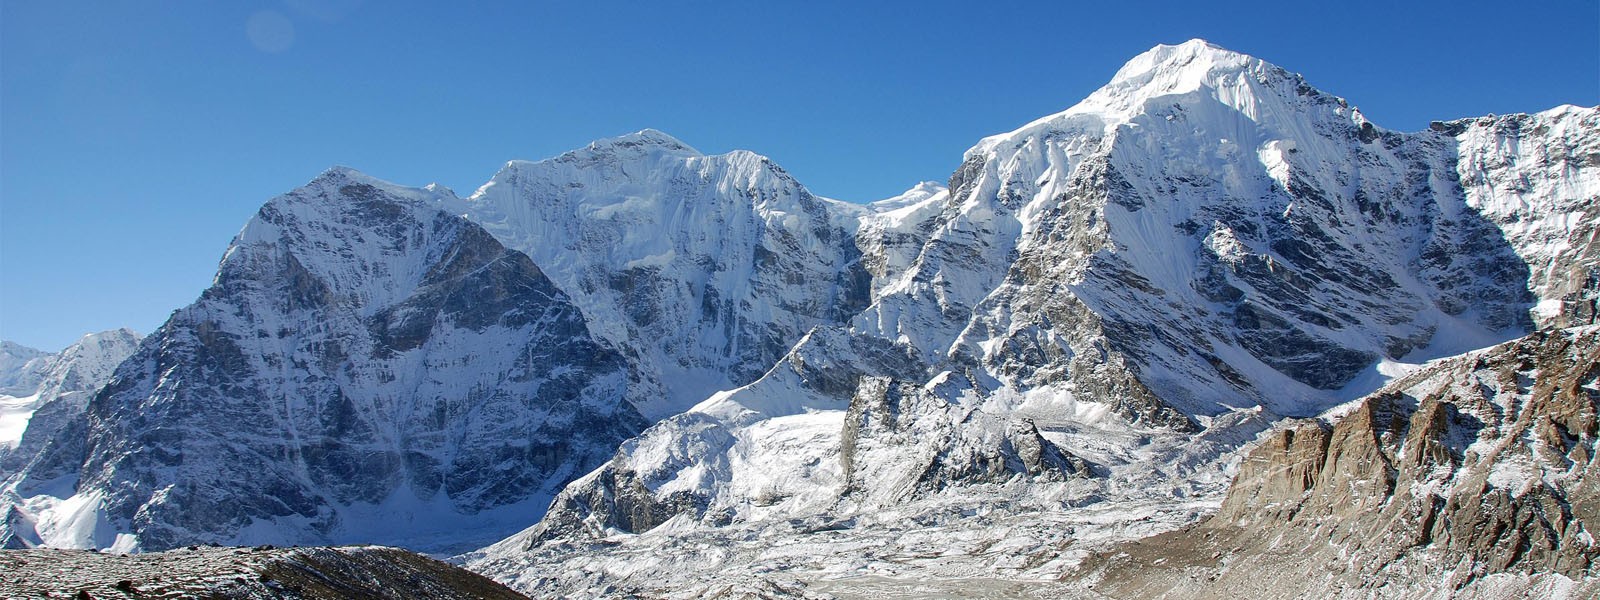 Dorje Lakpa Expedition